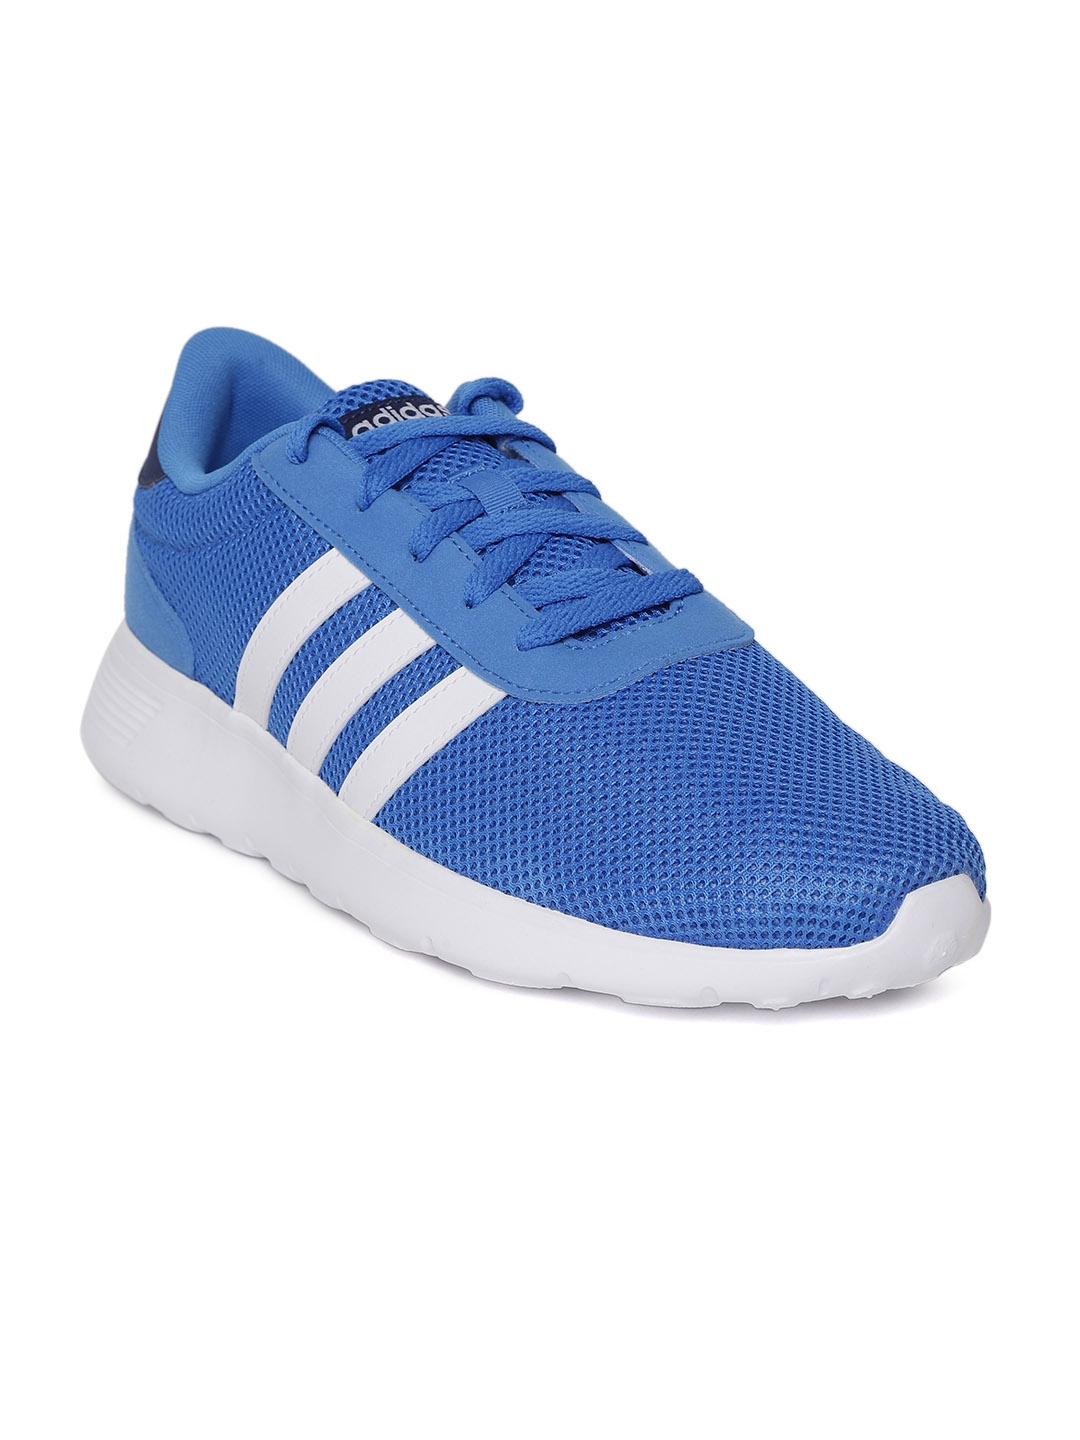 Buy ADIDAS Men Blue Lite Racer Running Shoes - Sports Shoes for Men ...